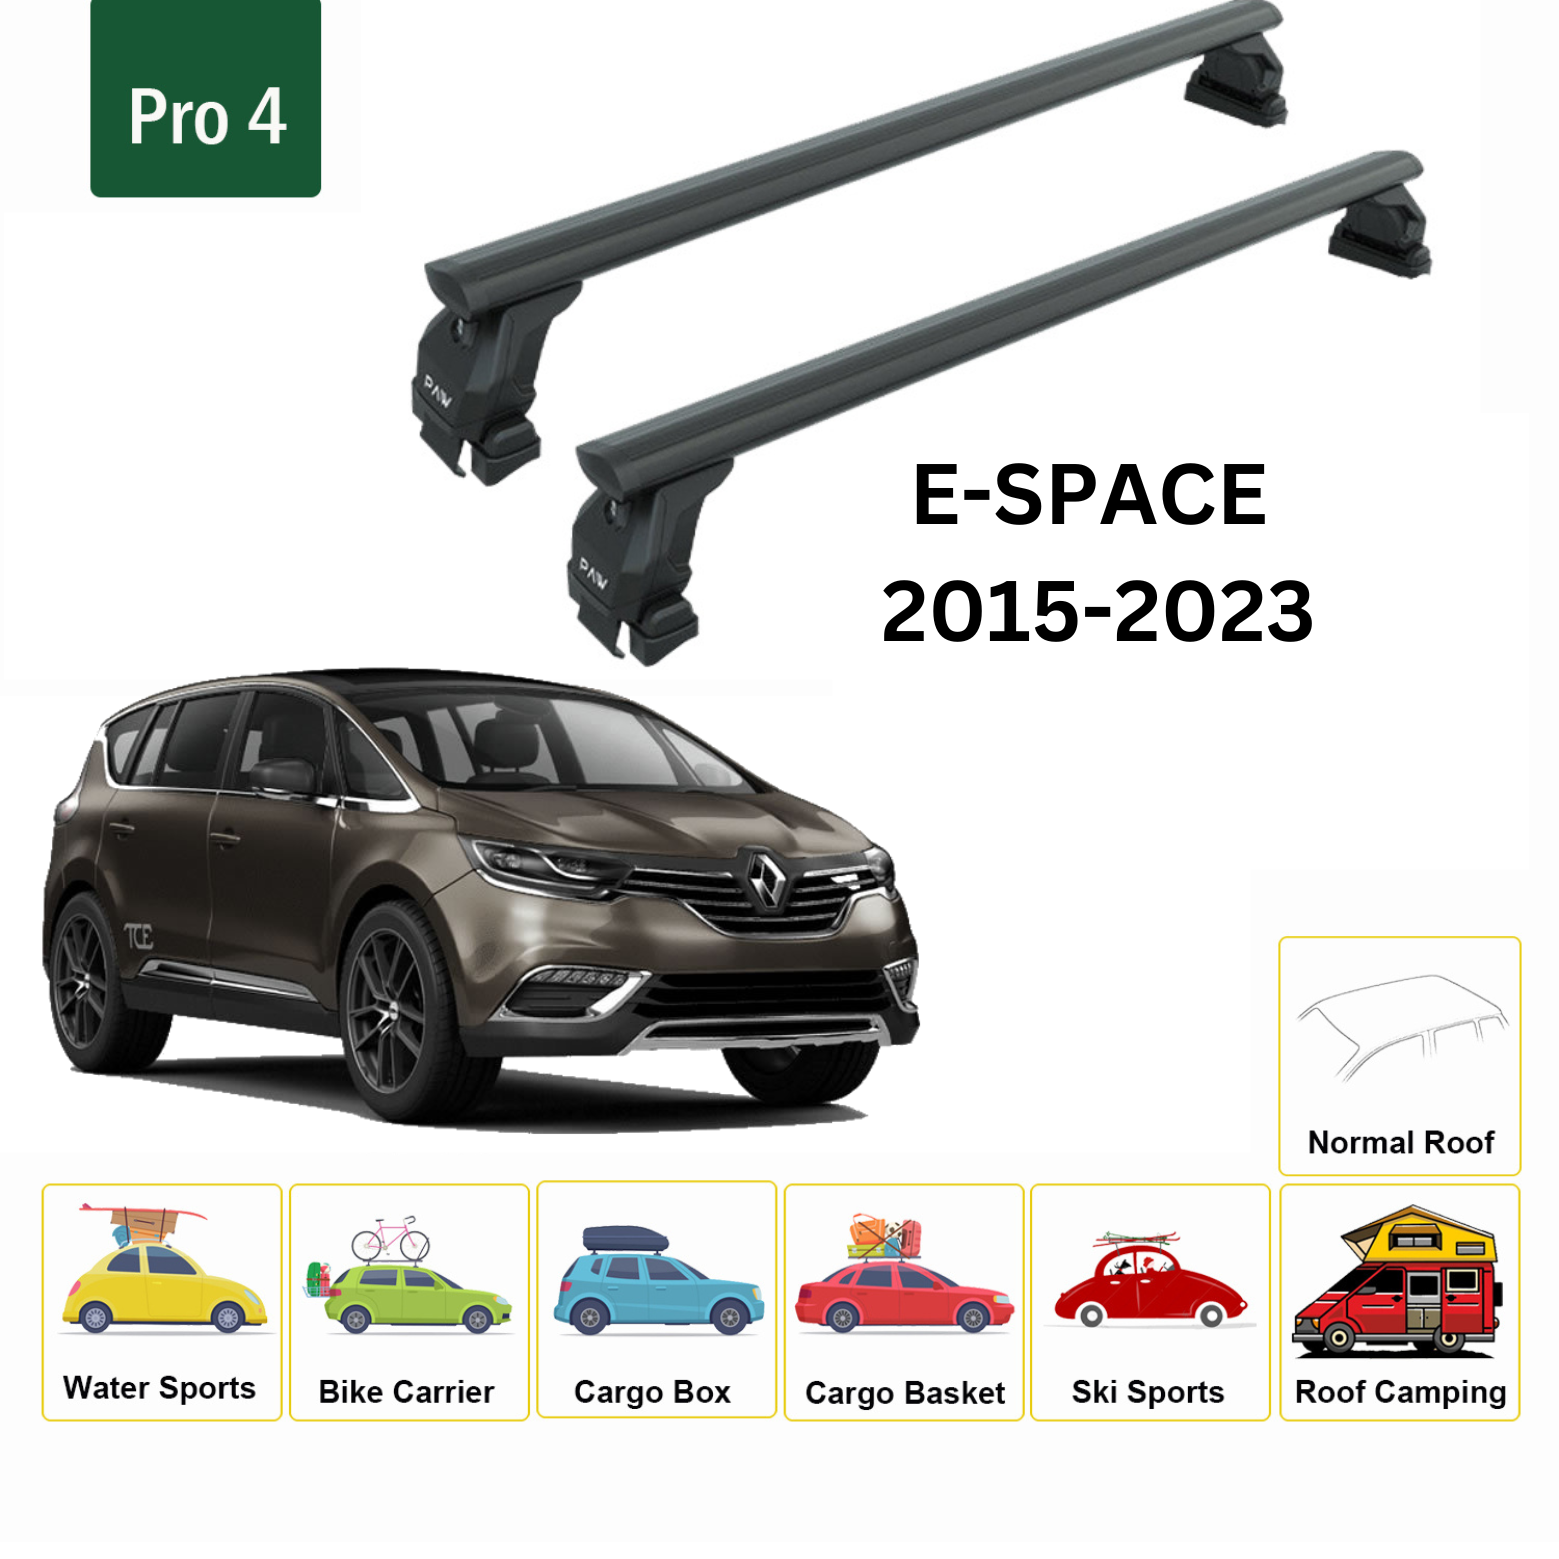 For Renault E-Space 2015-2023 Roof Rack System, Aluminium Cross Bar, Metal Bracket, Normal Roof, Black